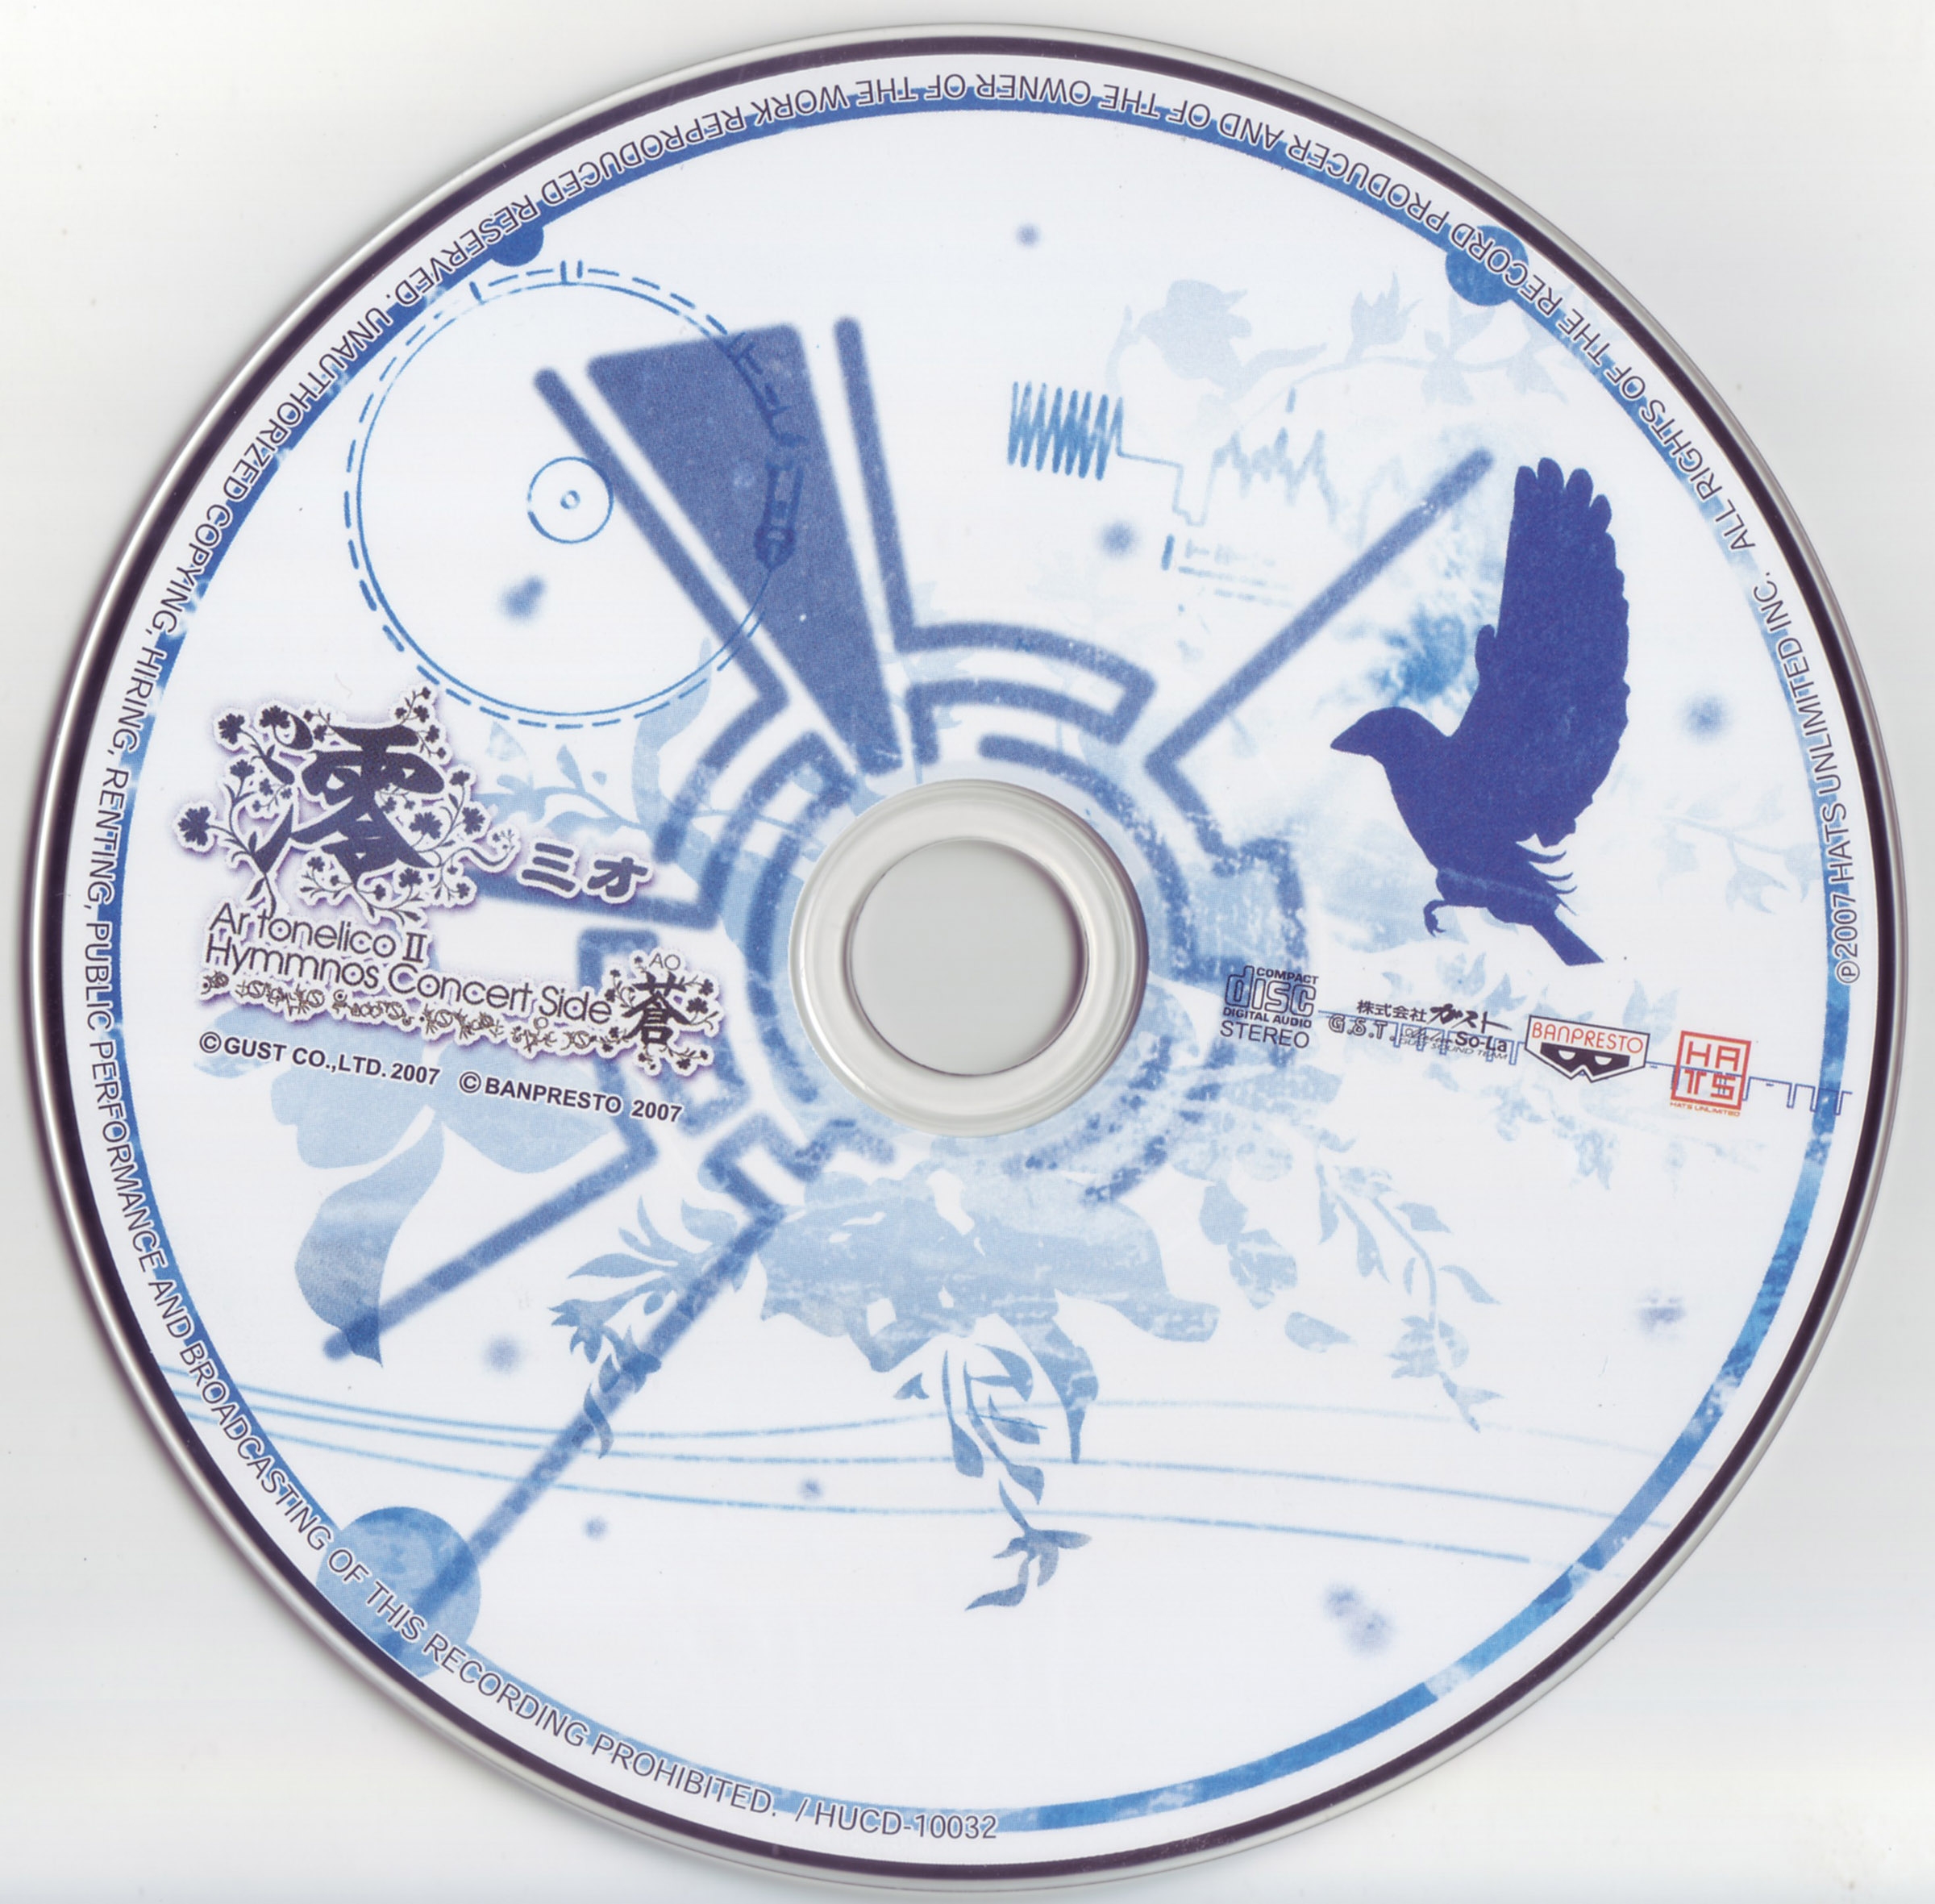 Waterway ~Mio Ar tonelico II Hymmnos Concert Side Blue (2007) MP3 -  Download Waterway ~Mio Ar tonelico II Hymmnos Concert Side Blue (2007)  Soundtracks for FREE!